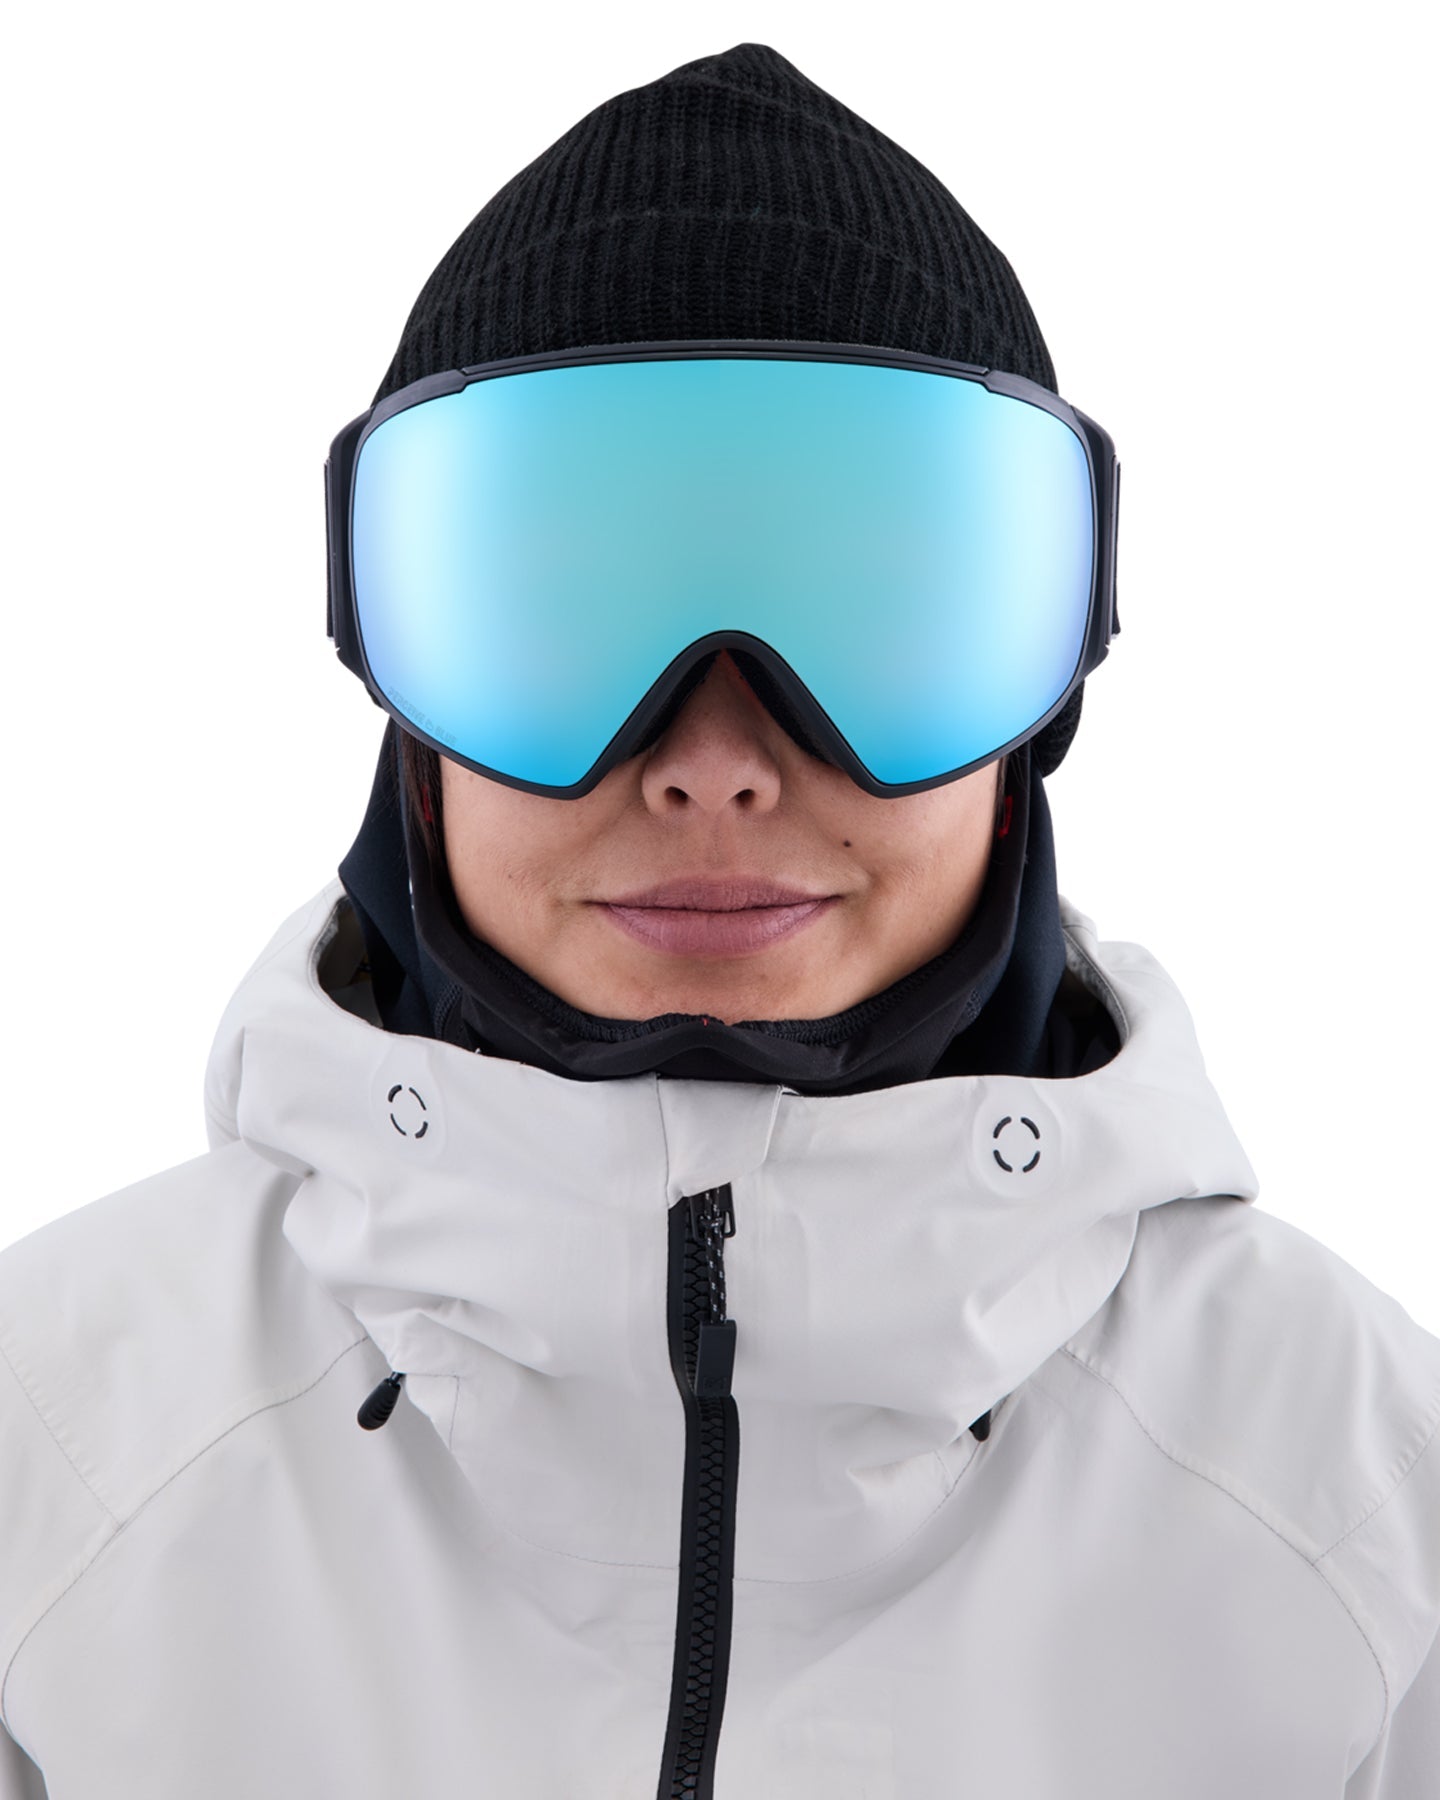 Anon M4S Toric Low Bridge Fit Snow Goggles + Bonus Lens + MFI - Black / Perceive Variable Blue Men's Snow Goggles - Trojan Wake Ski Snow